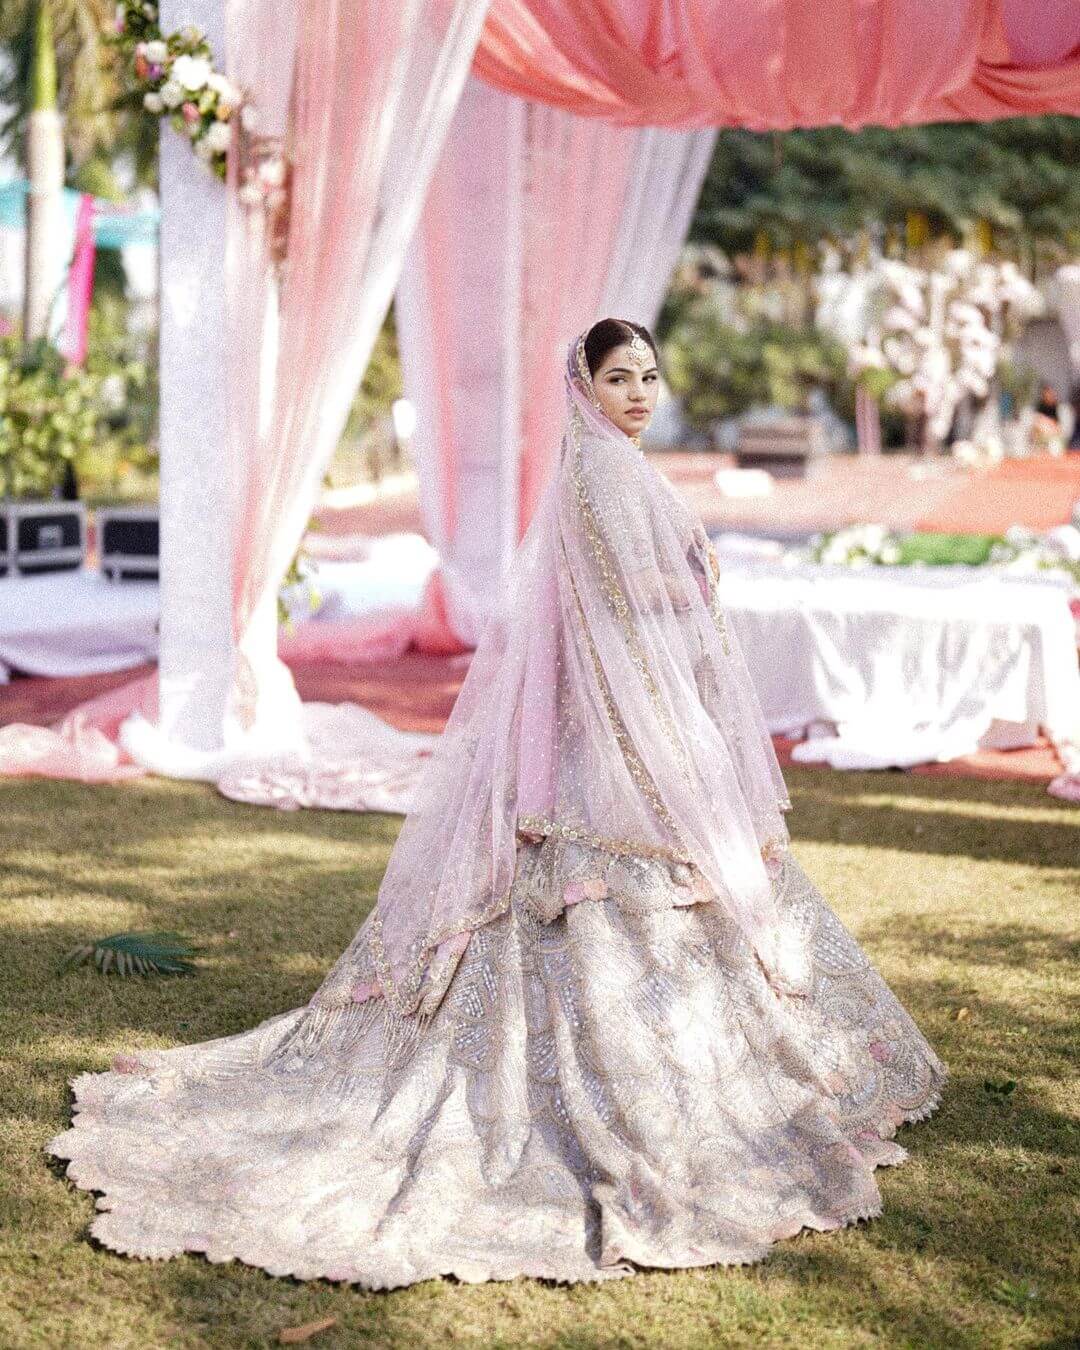 The Princess Pink Shade Of Lehenga Shades Of Bridal Pink Lehenga For Her Wedding Day